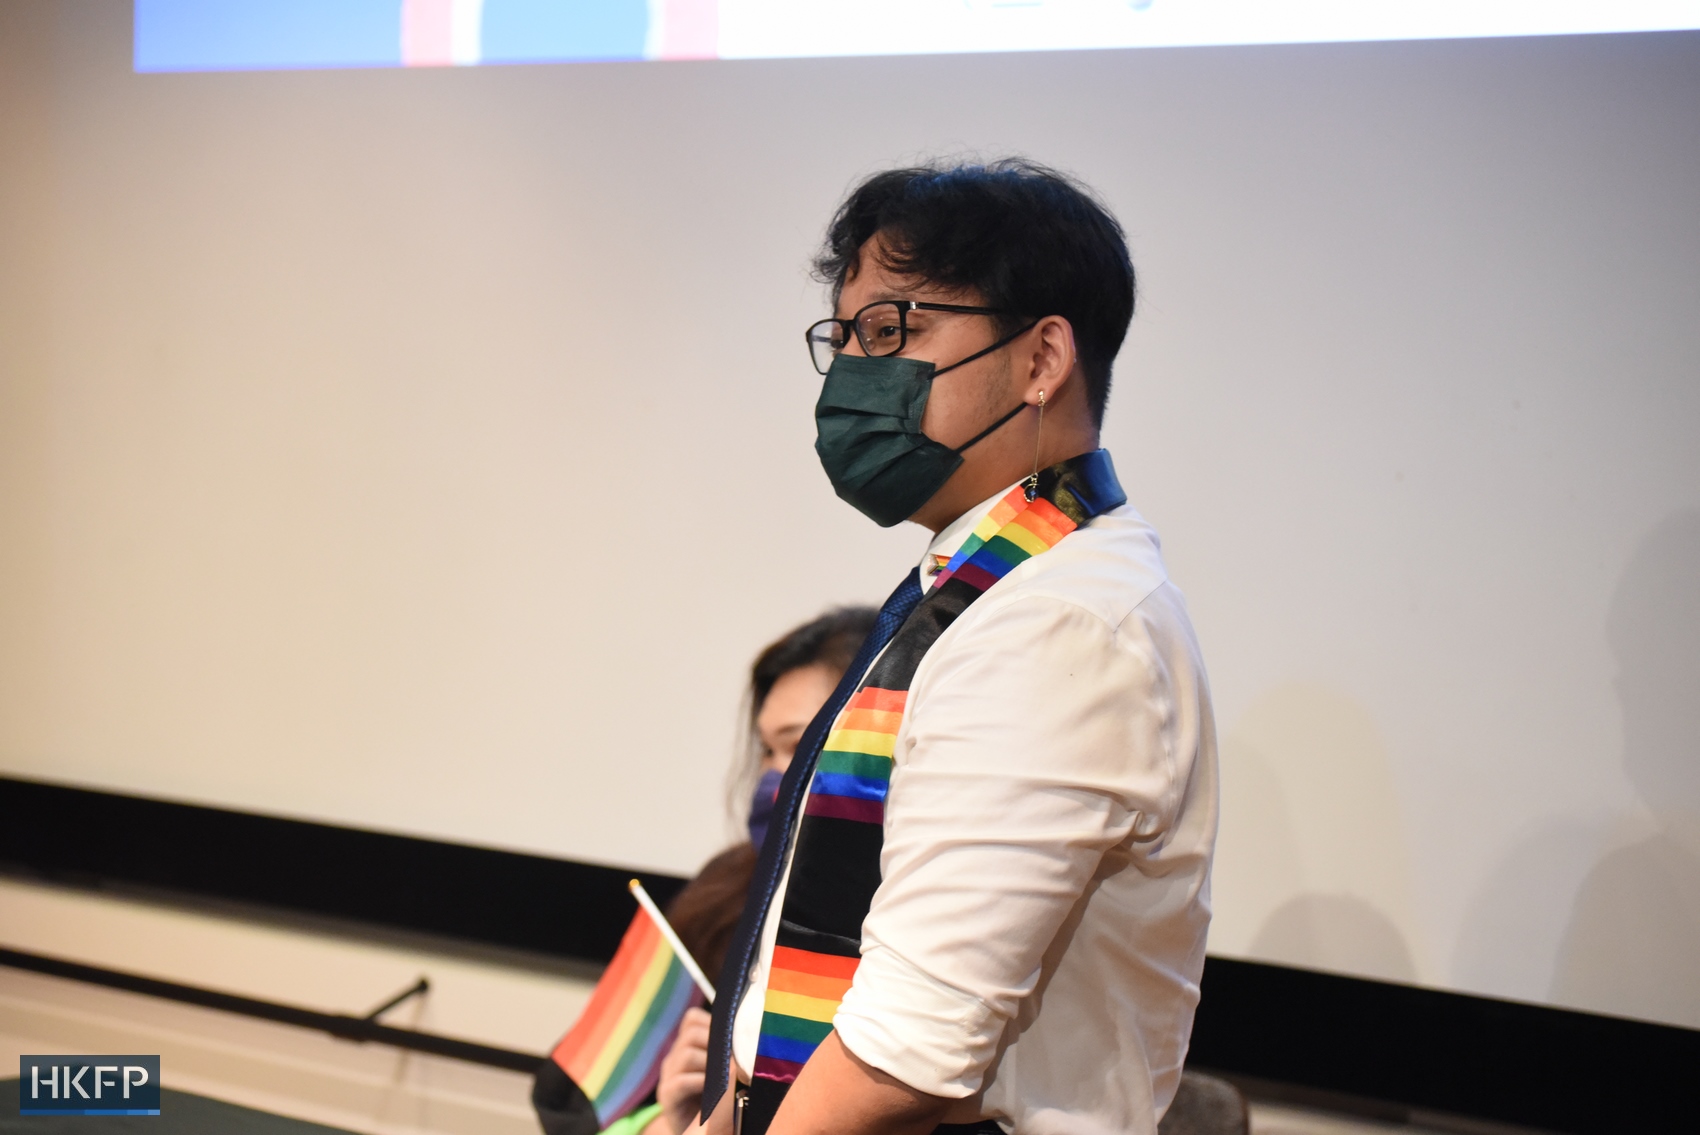 queer graduation LGBT rainbow ethnic minority